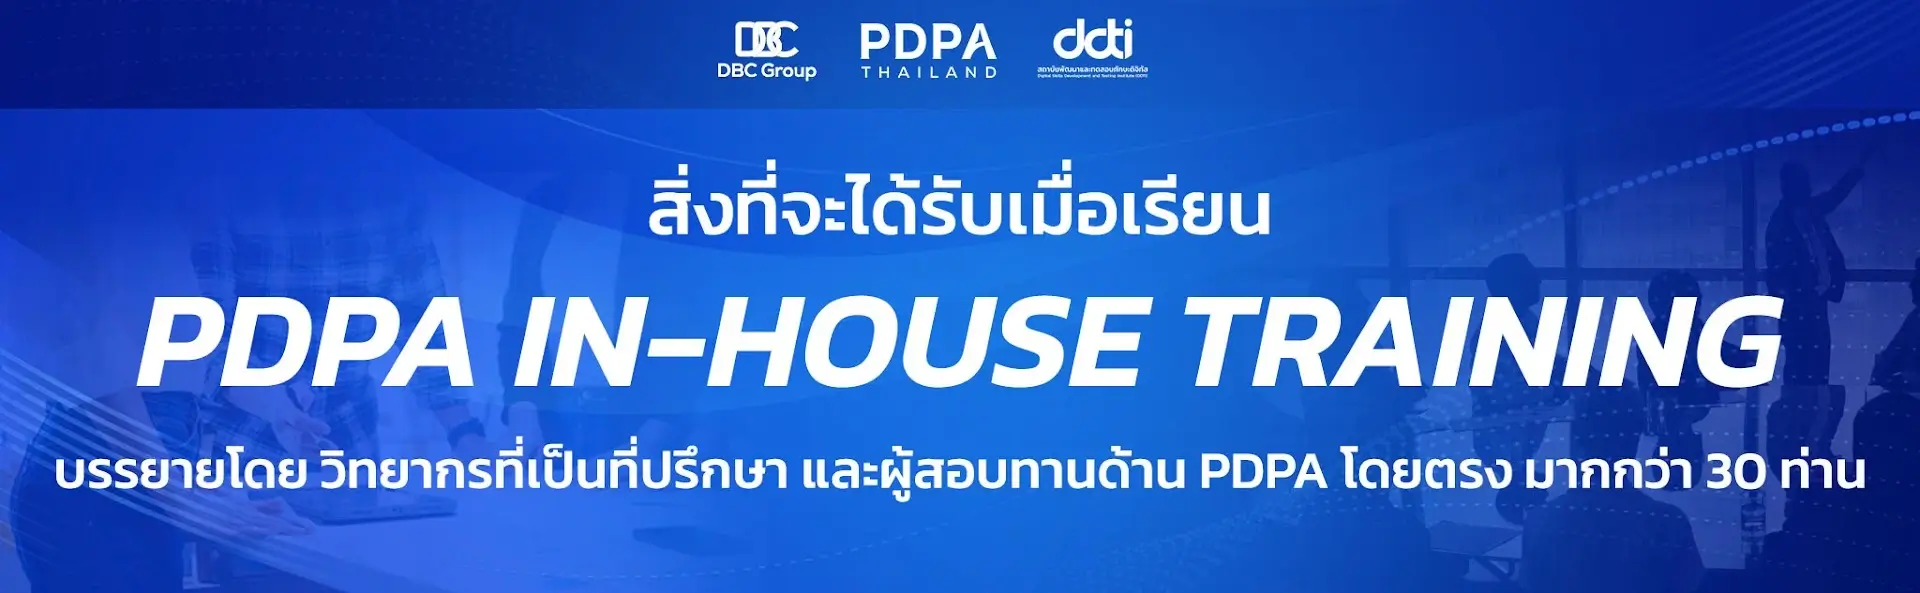 PDPA-Inhouse-Training-ที่ปรึกษาPDPA